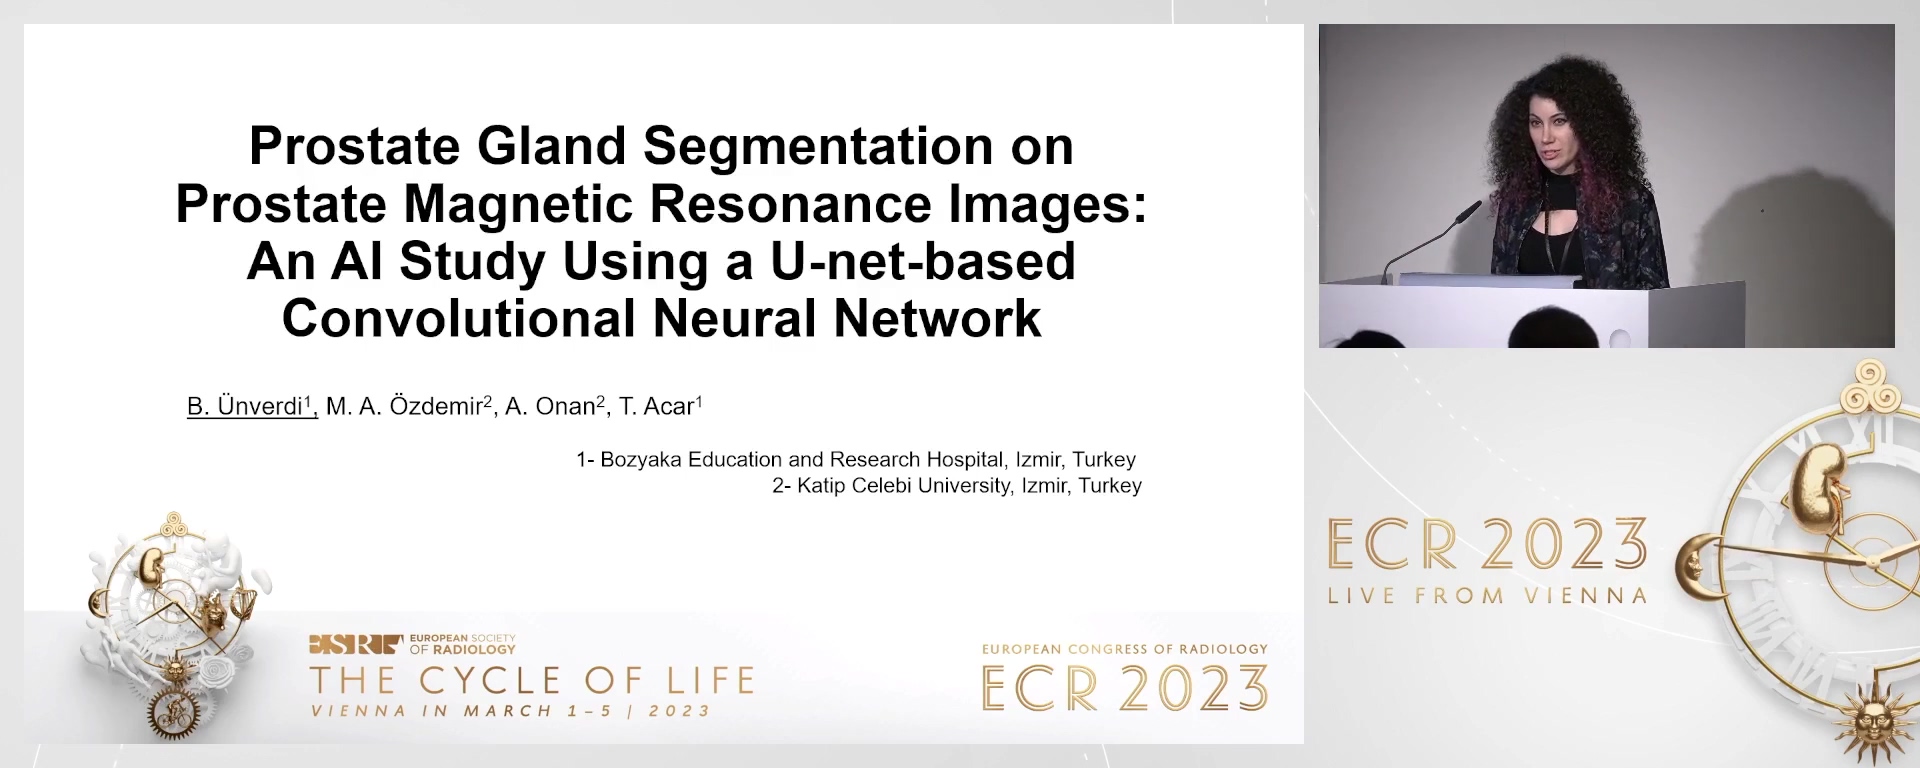 Prostate gland segmentation on prostate magnetic resonance images: an AI study using a U-net-based convolutional neural network - Başak Ünverdi, Izmir / TR